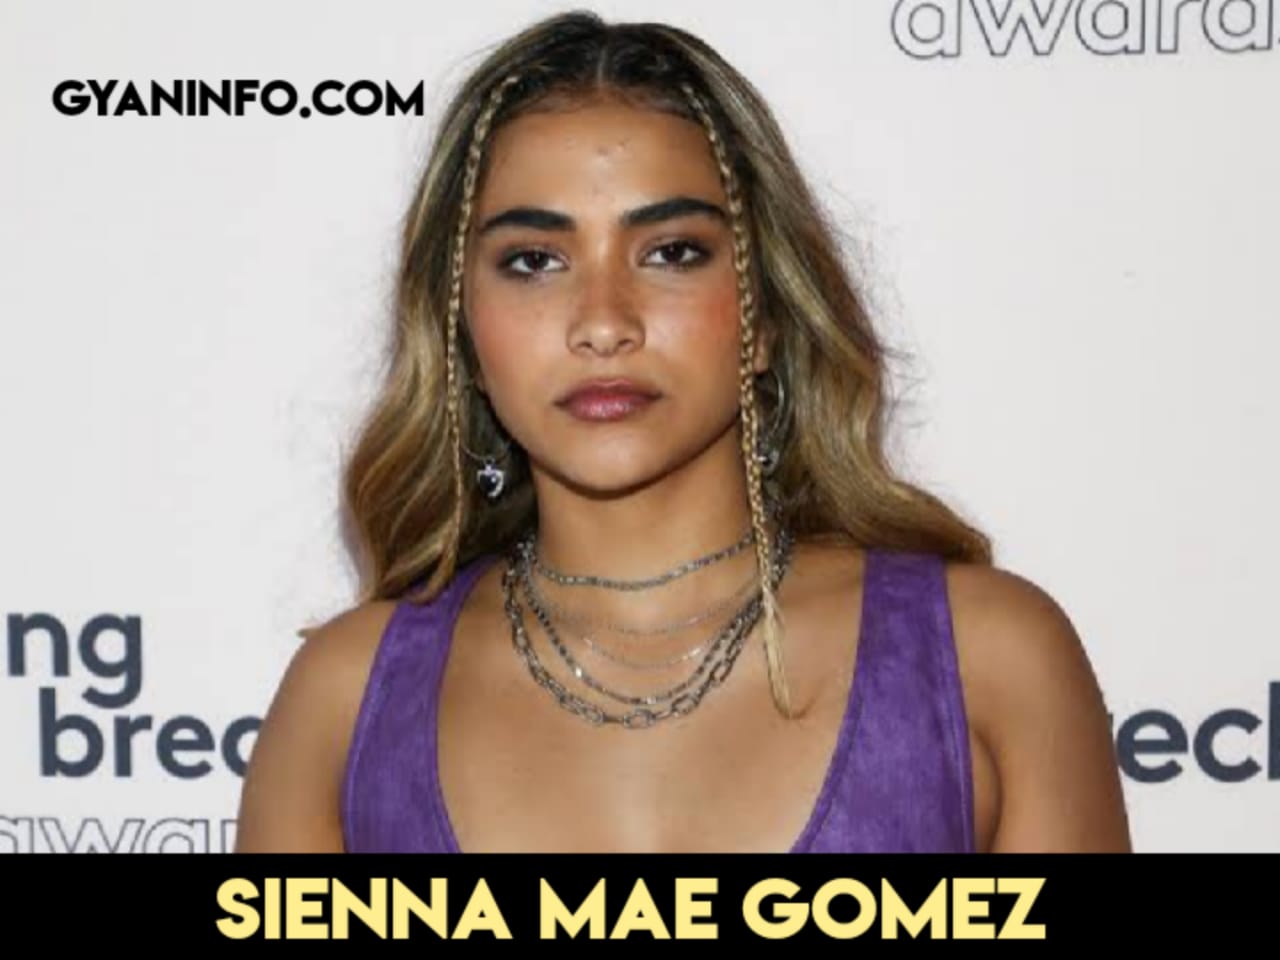 Sienna Mae Gomez Biography, Height, Age, Weight, Body Measurements, Boyfriend, Family, Parents, Net Worth, Wiki & More